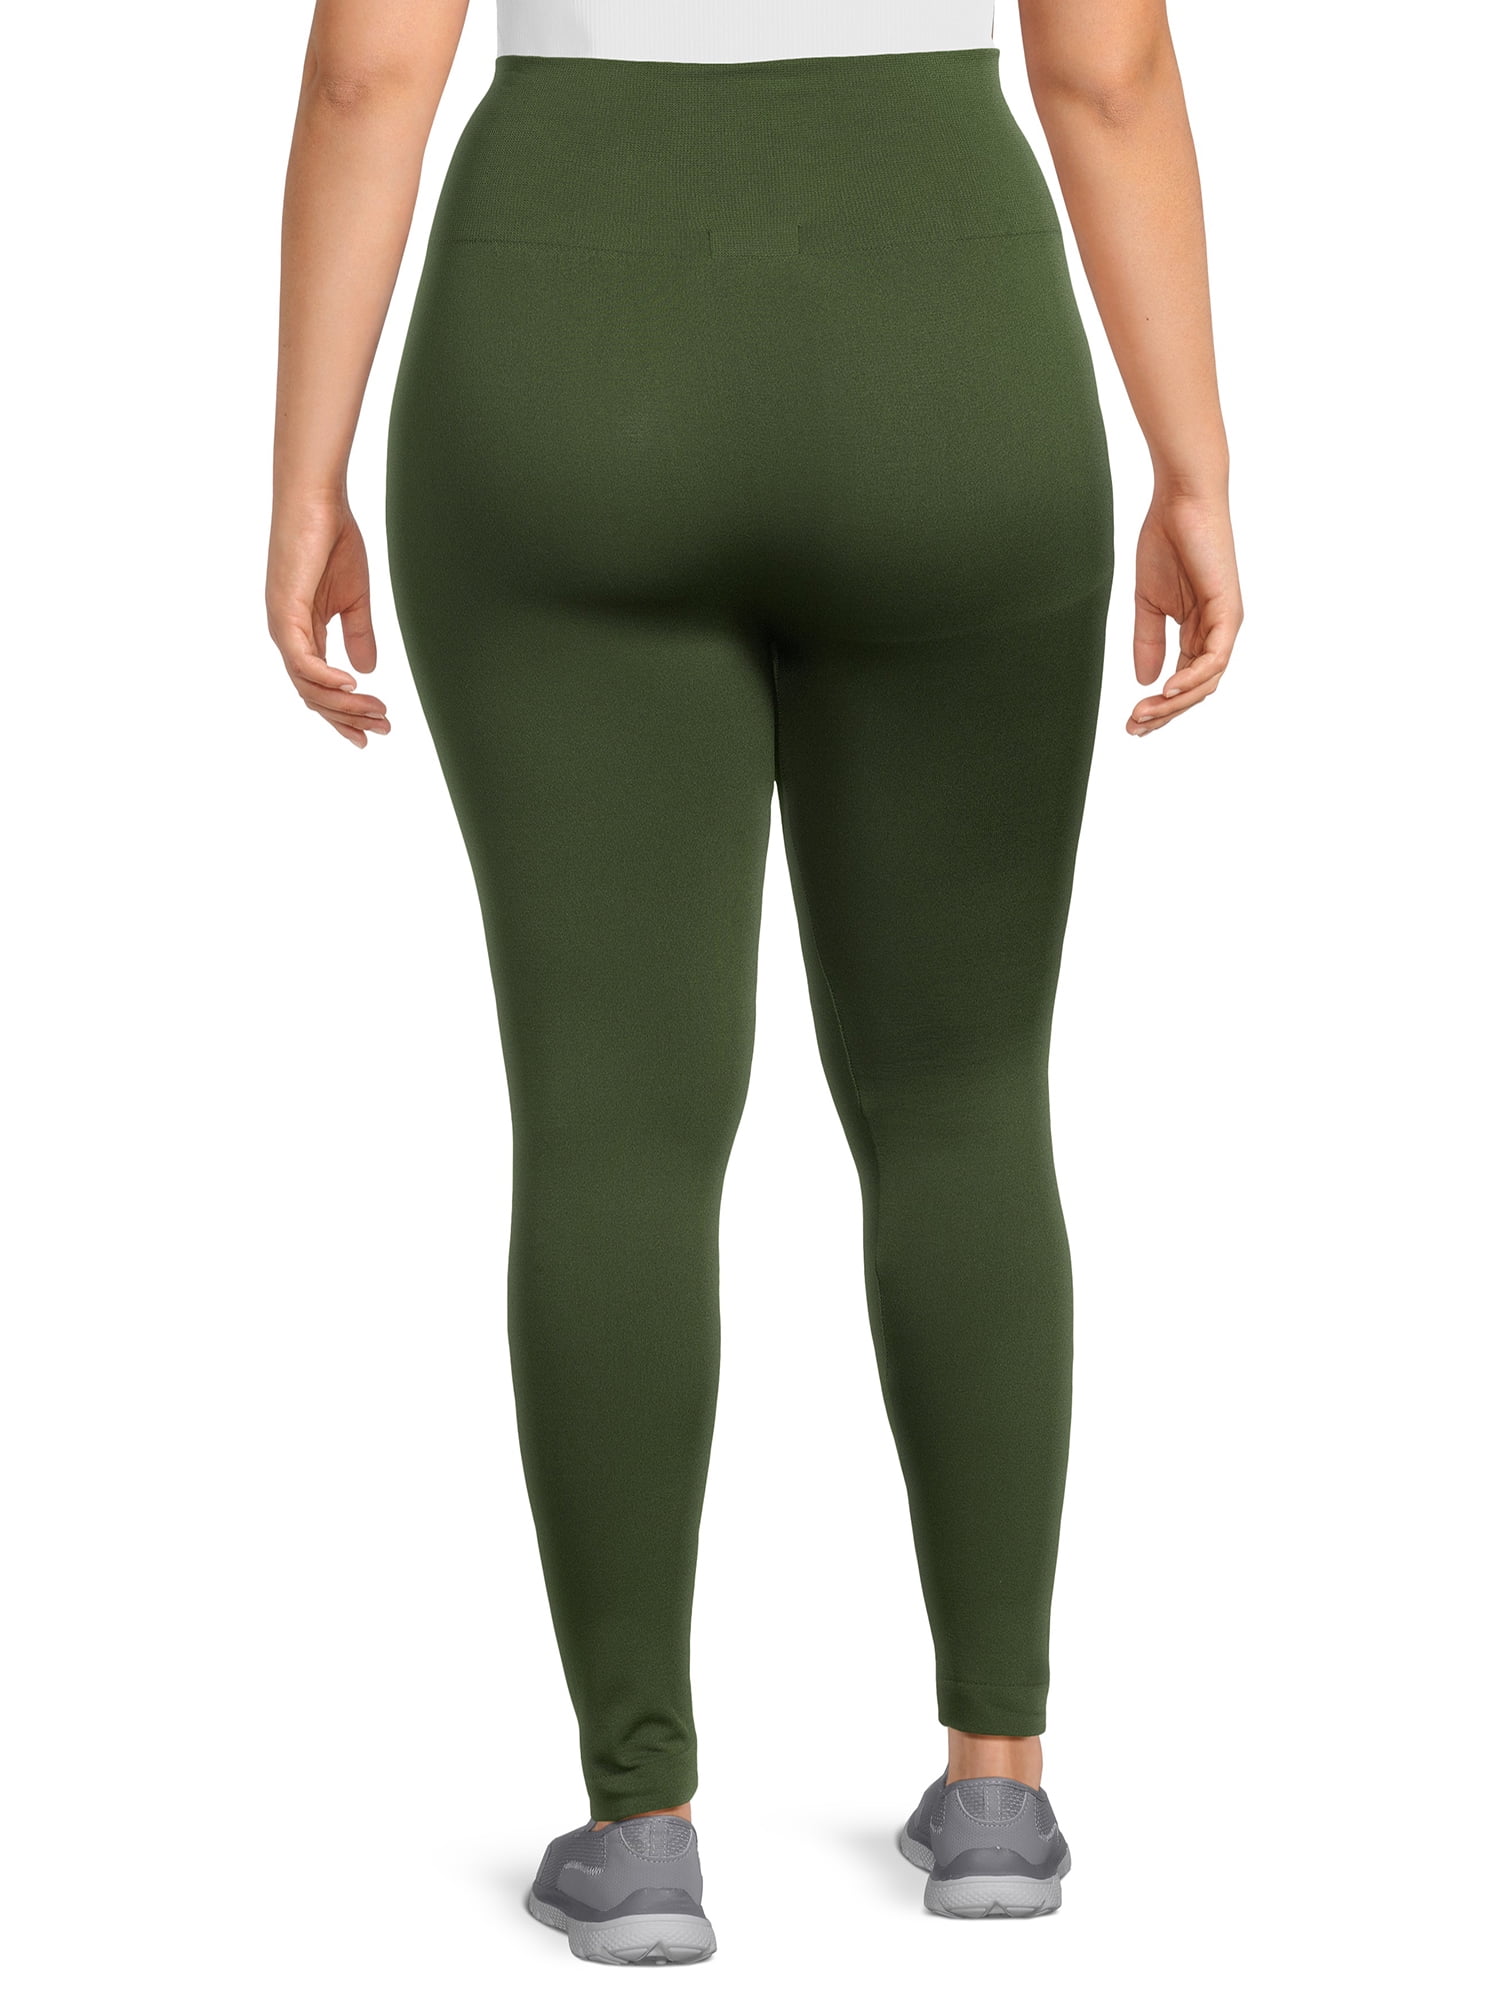 Peacock Printed Legging Green Ladies Feather Yoga Bottom Stretchy Digital  Pants